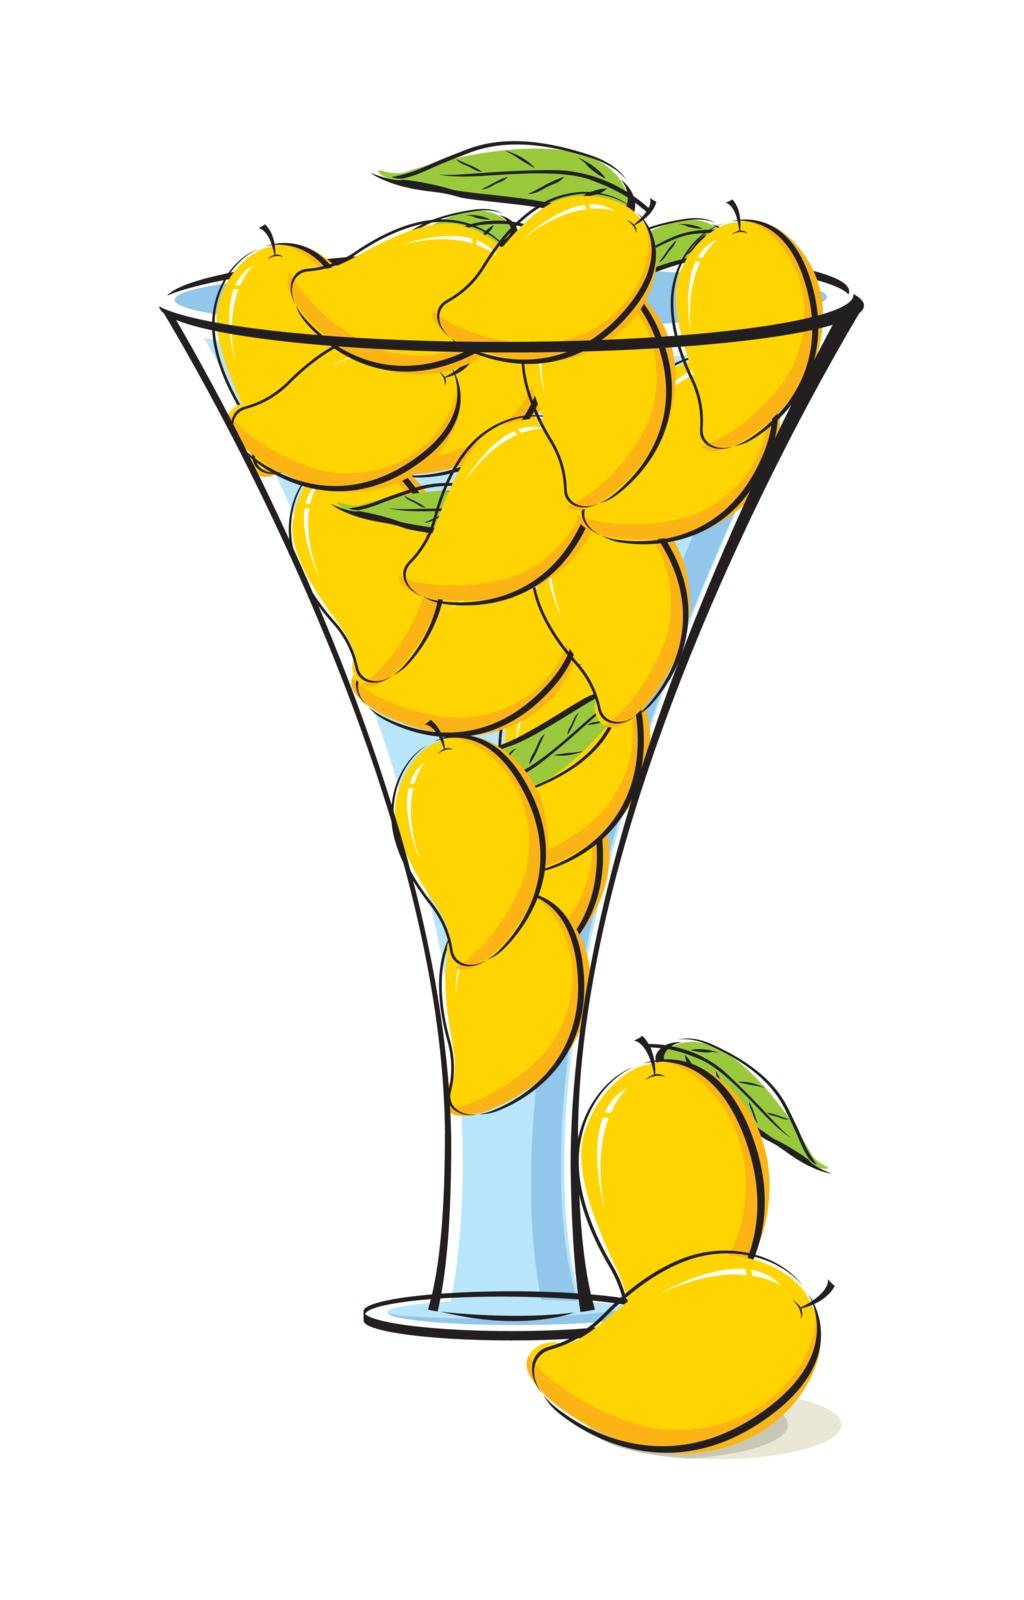 Mangos in glass by Myimagine